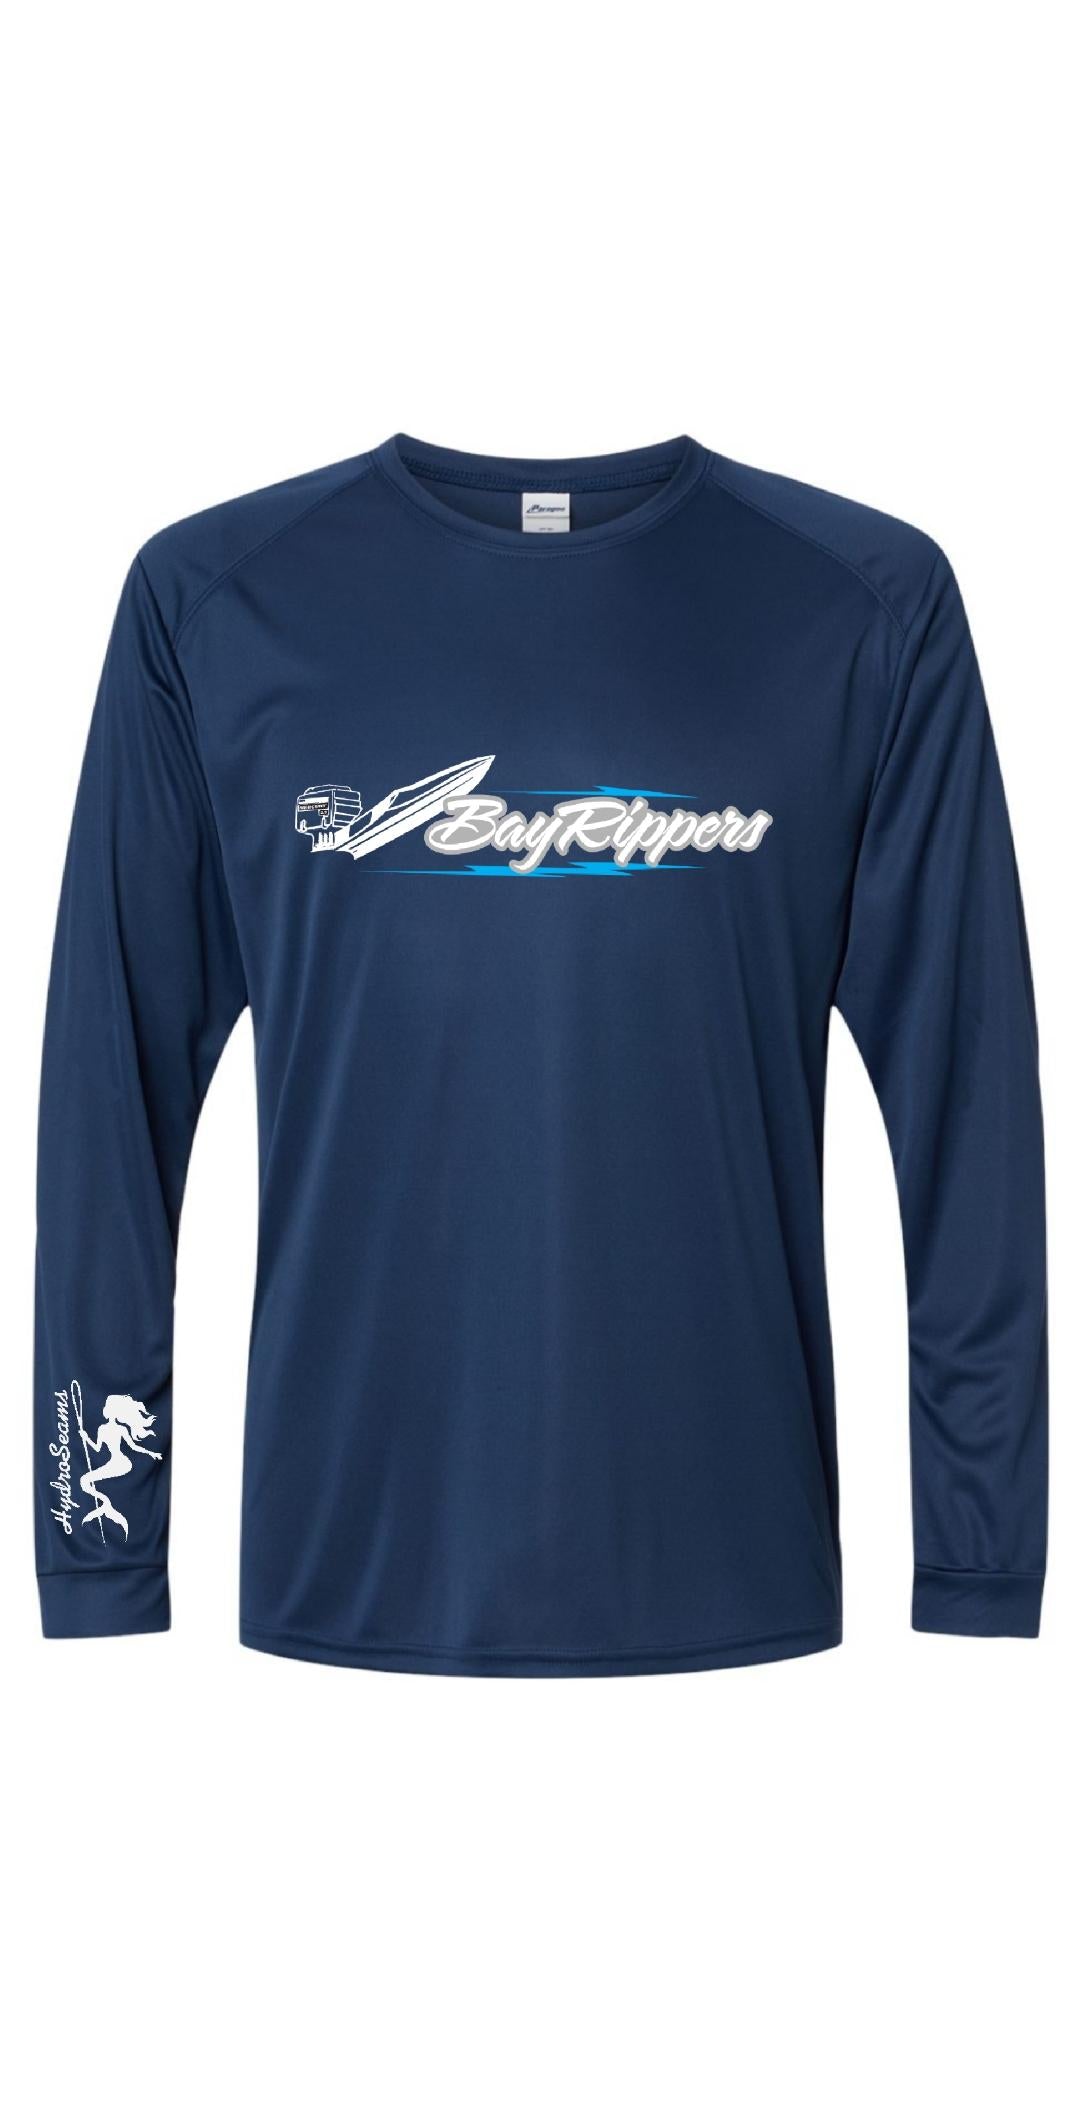 Bayrippers UV Performance Shirt